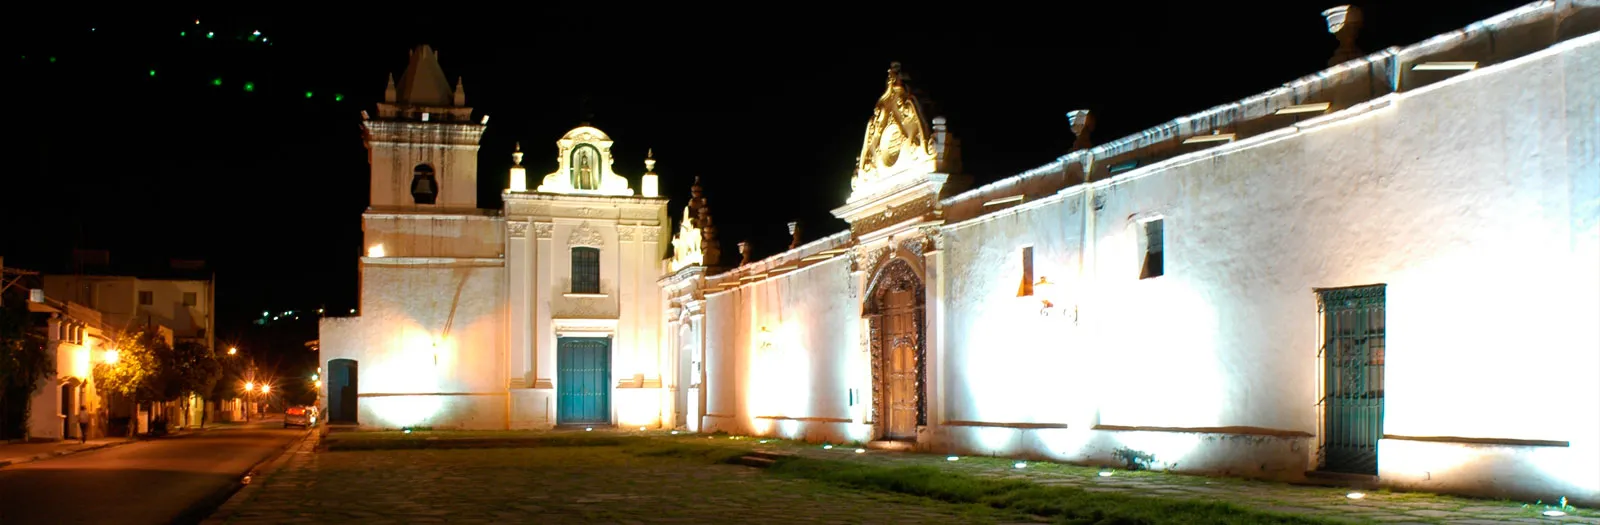 Convento San Bernardo, Salta. Por Eliseo Miciu (gentileza de turismo.salta.gov.ar)